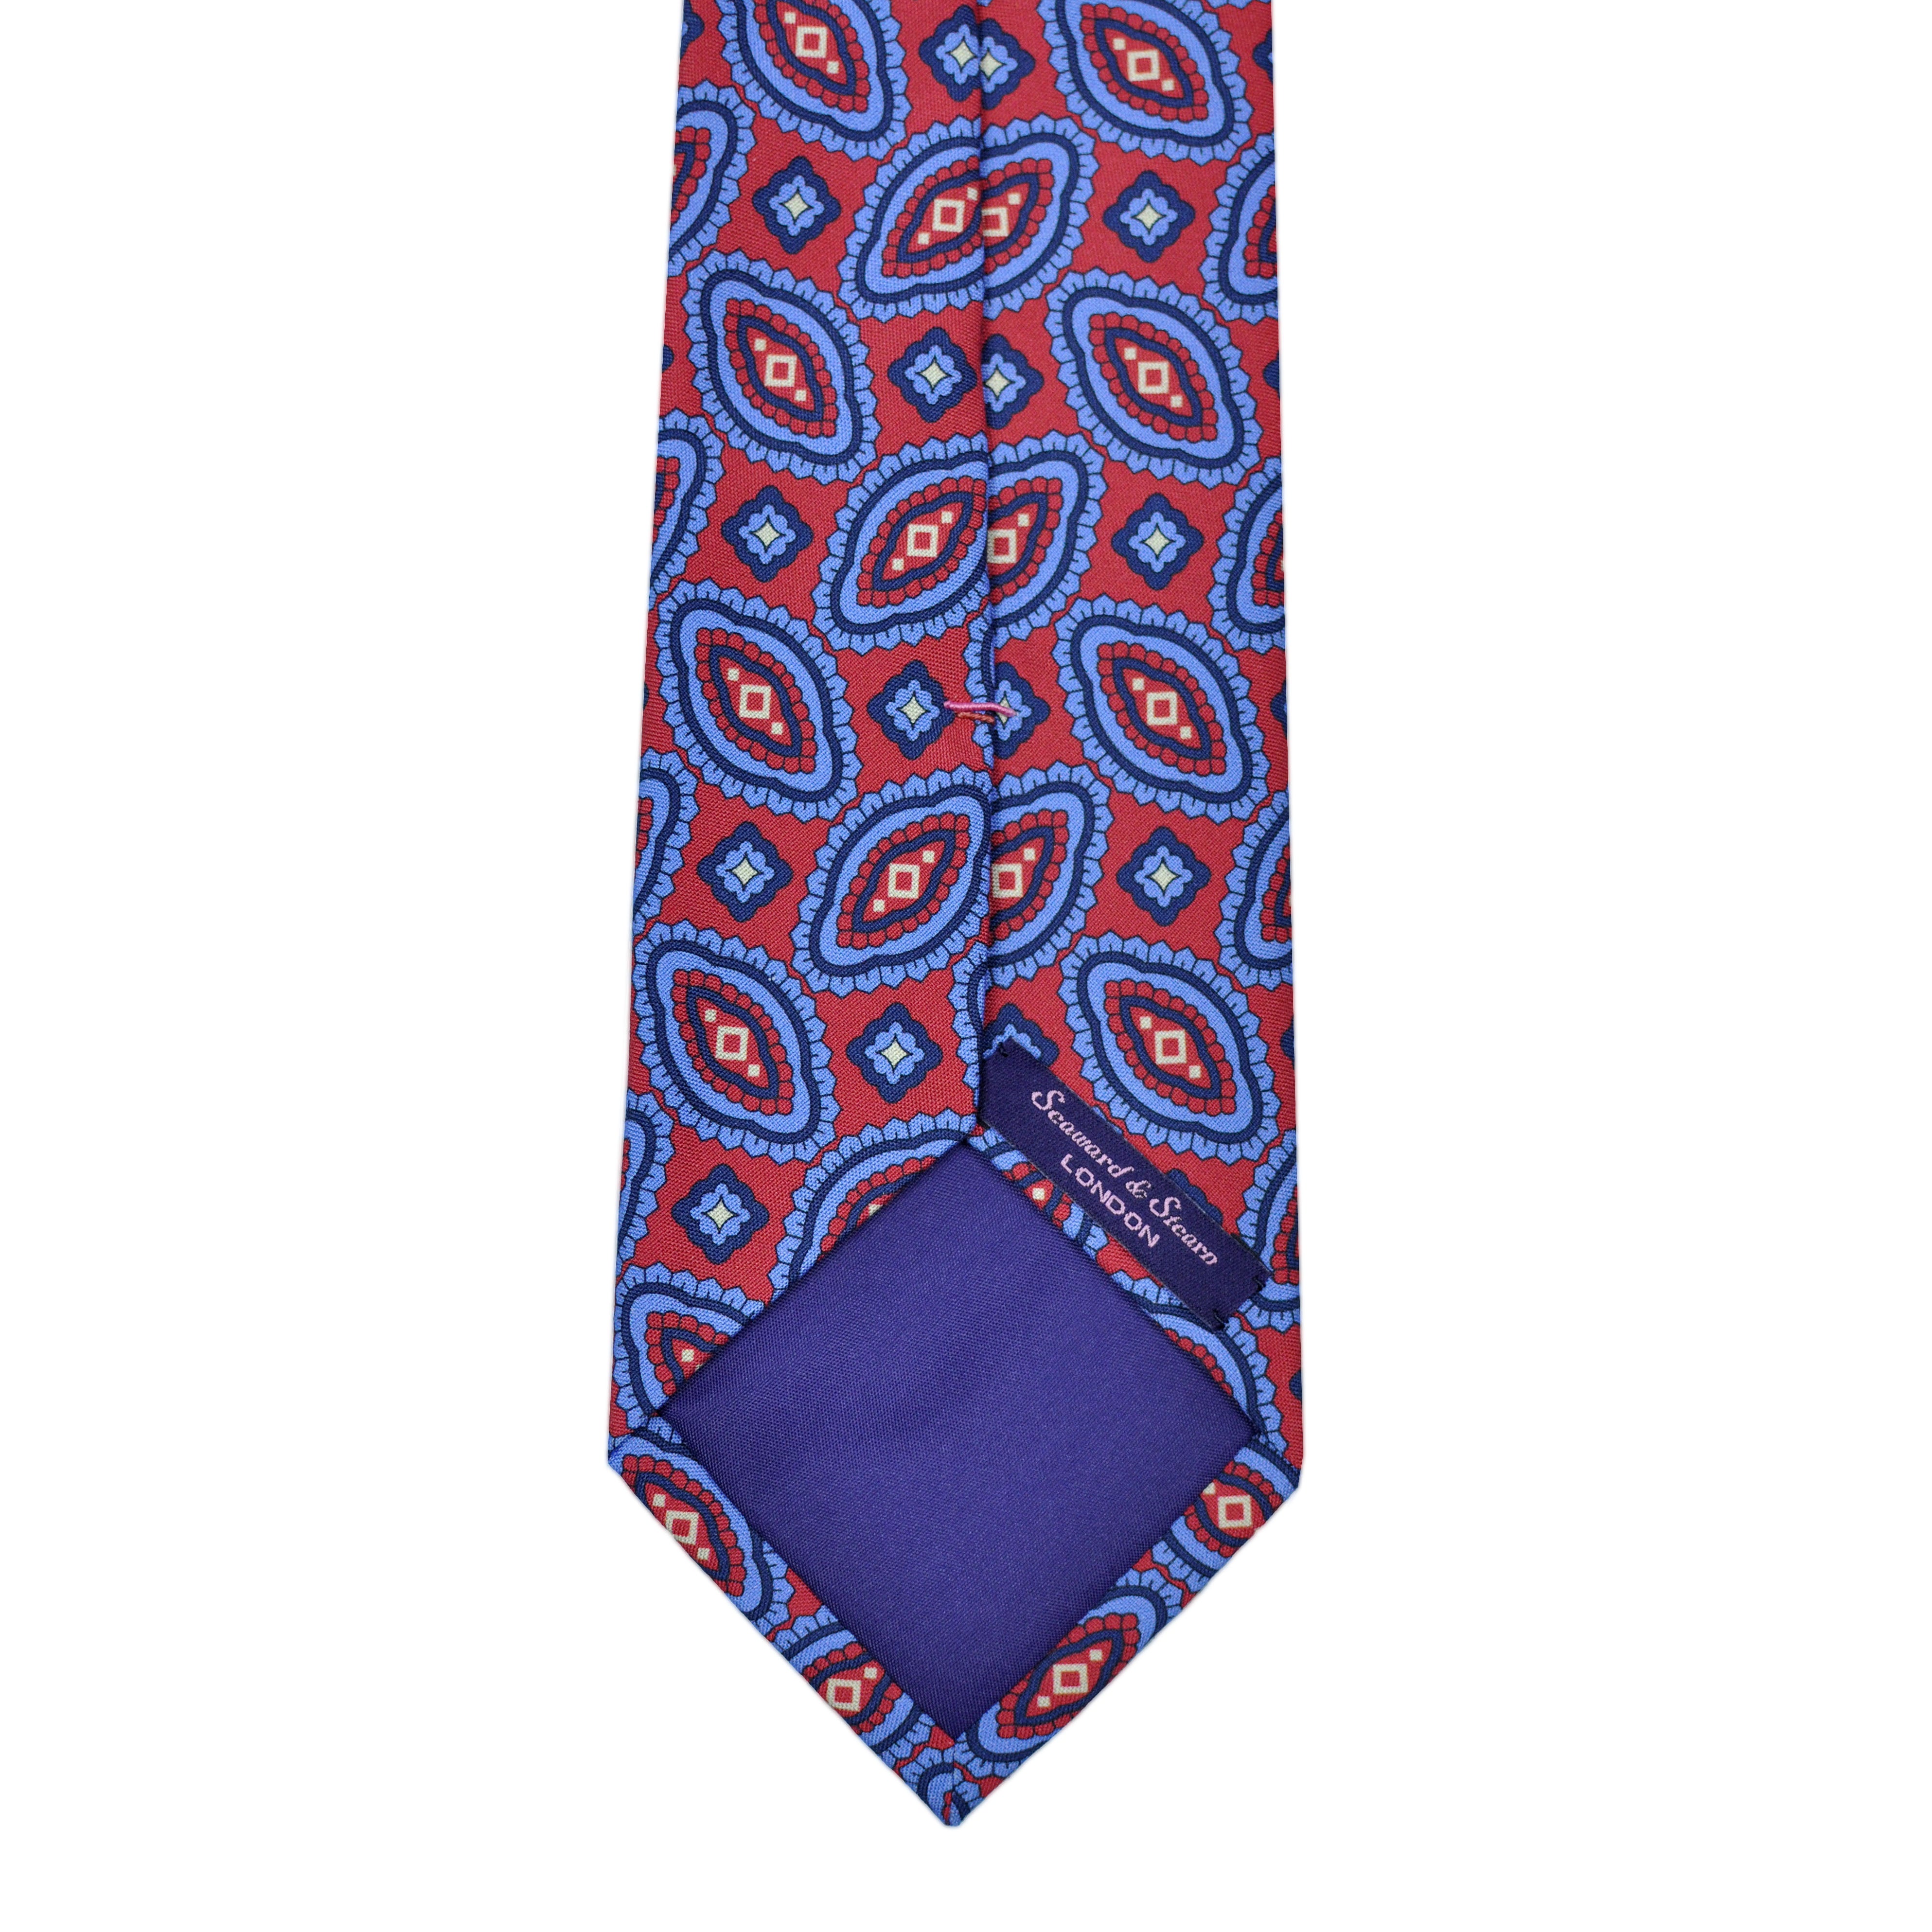 Florets 'Dusty Silk' Print Tie in Blue & Red